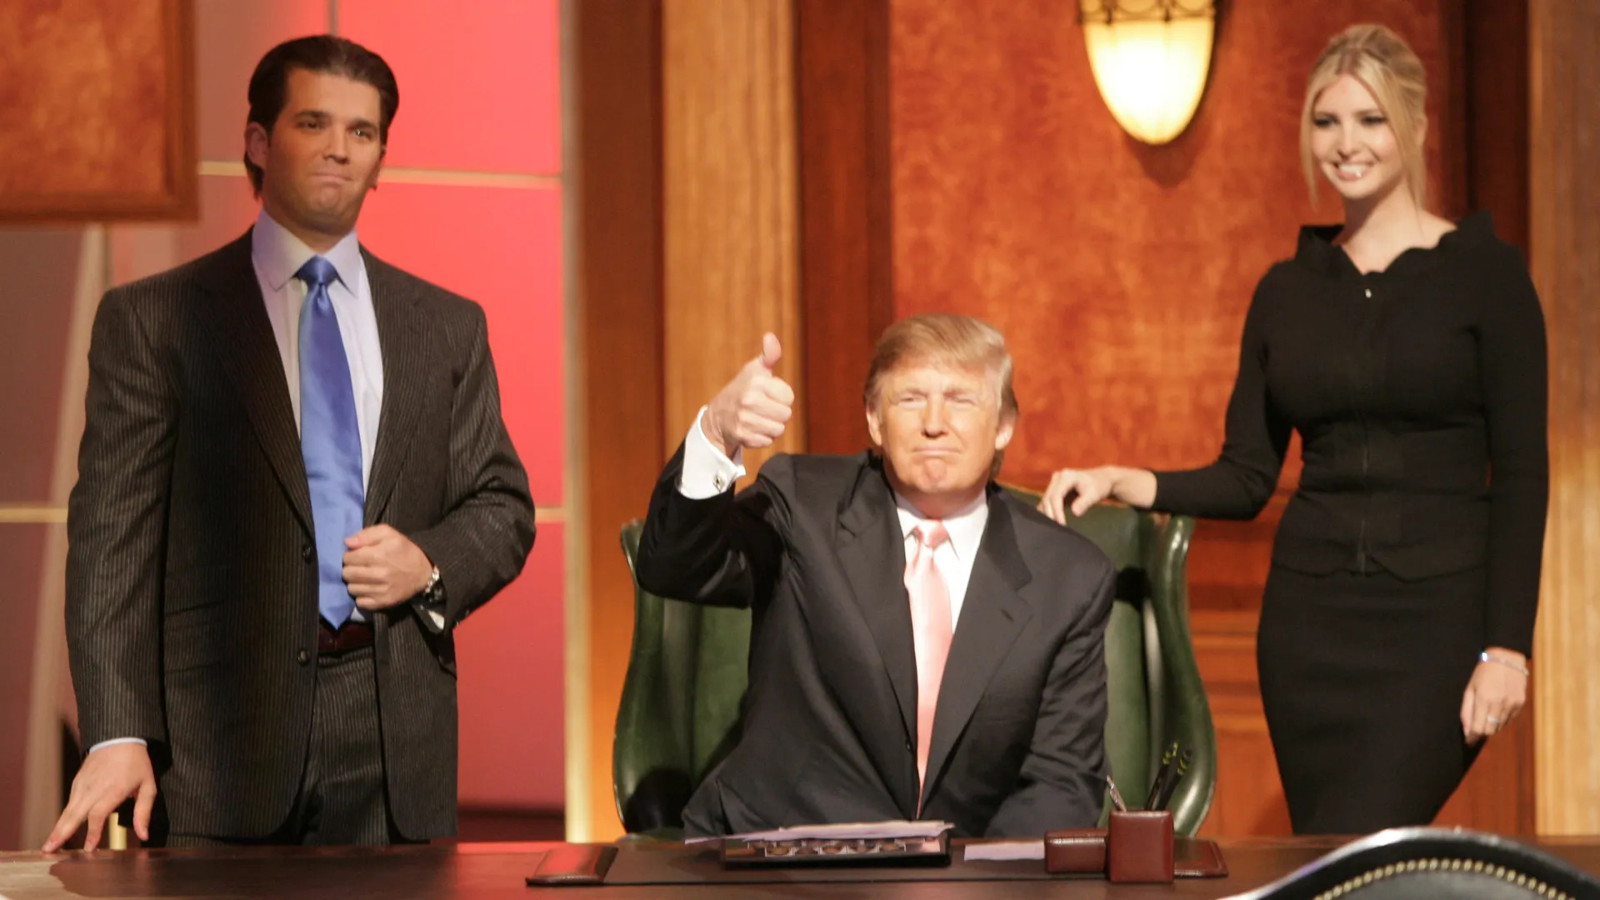 Donald Trump's The Apprentice ran for 15 seasons | NBC